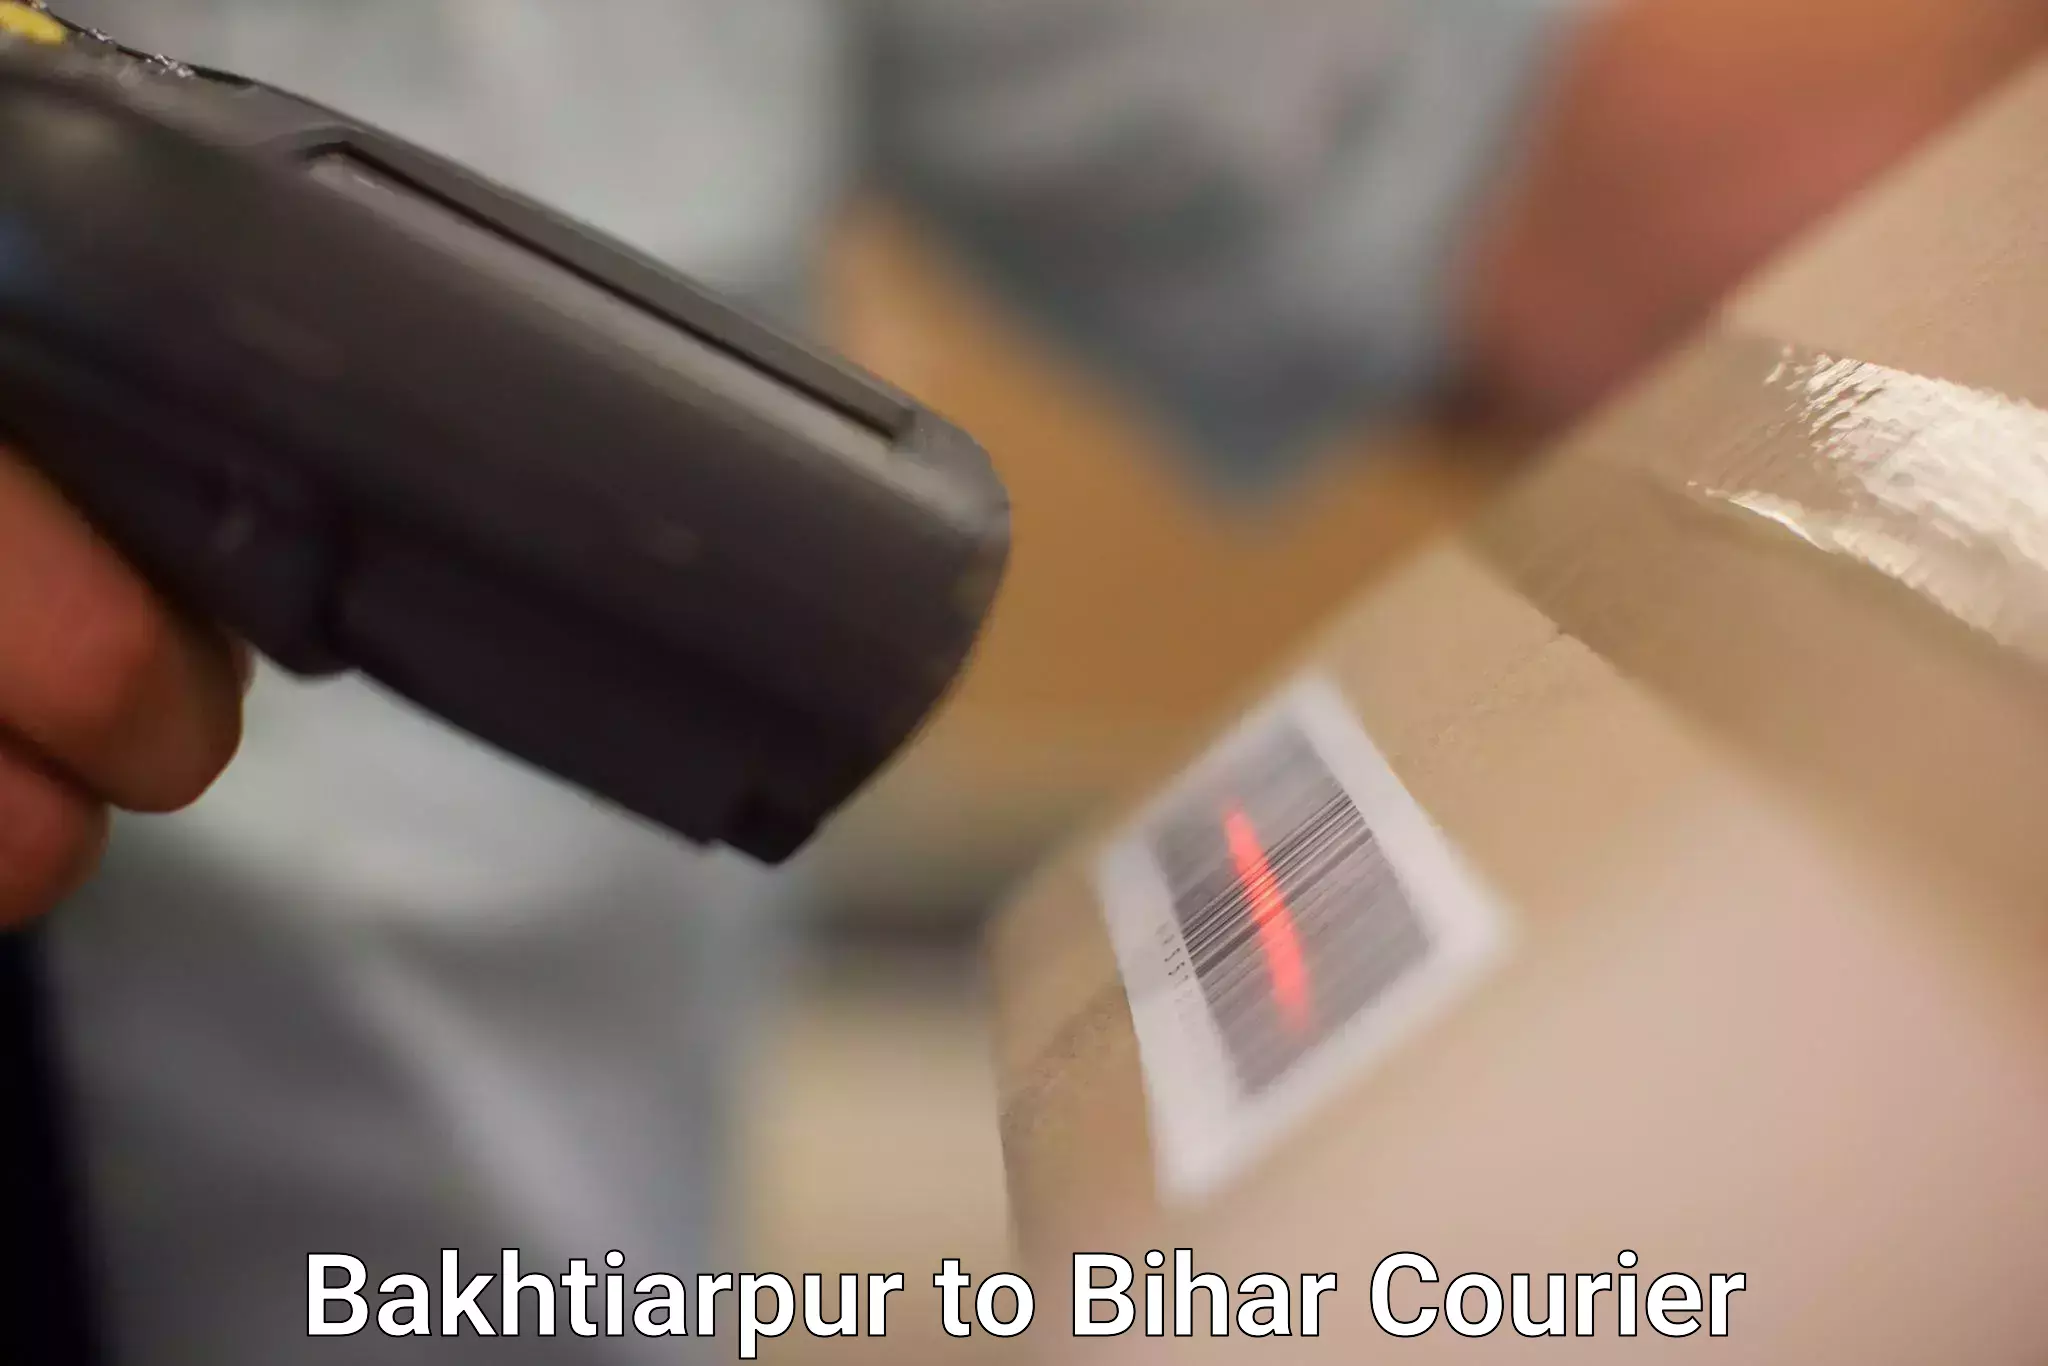 Cargo delivery service Bakhtiarpur to Forbesganj